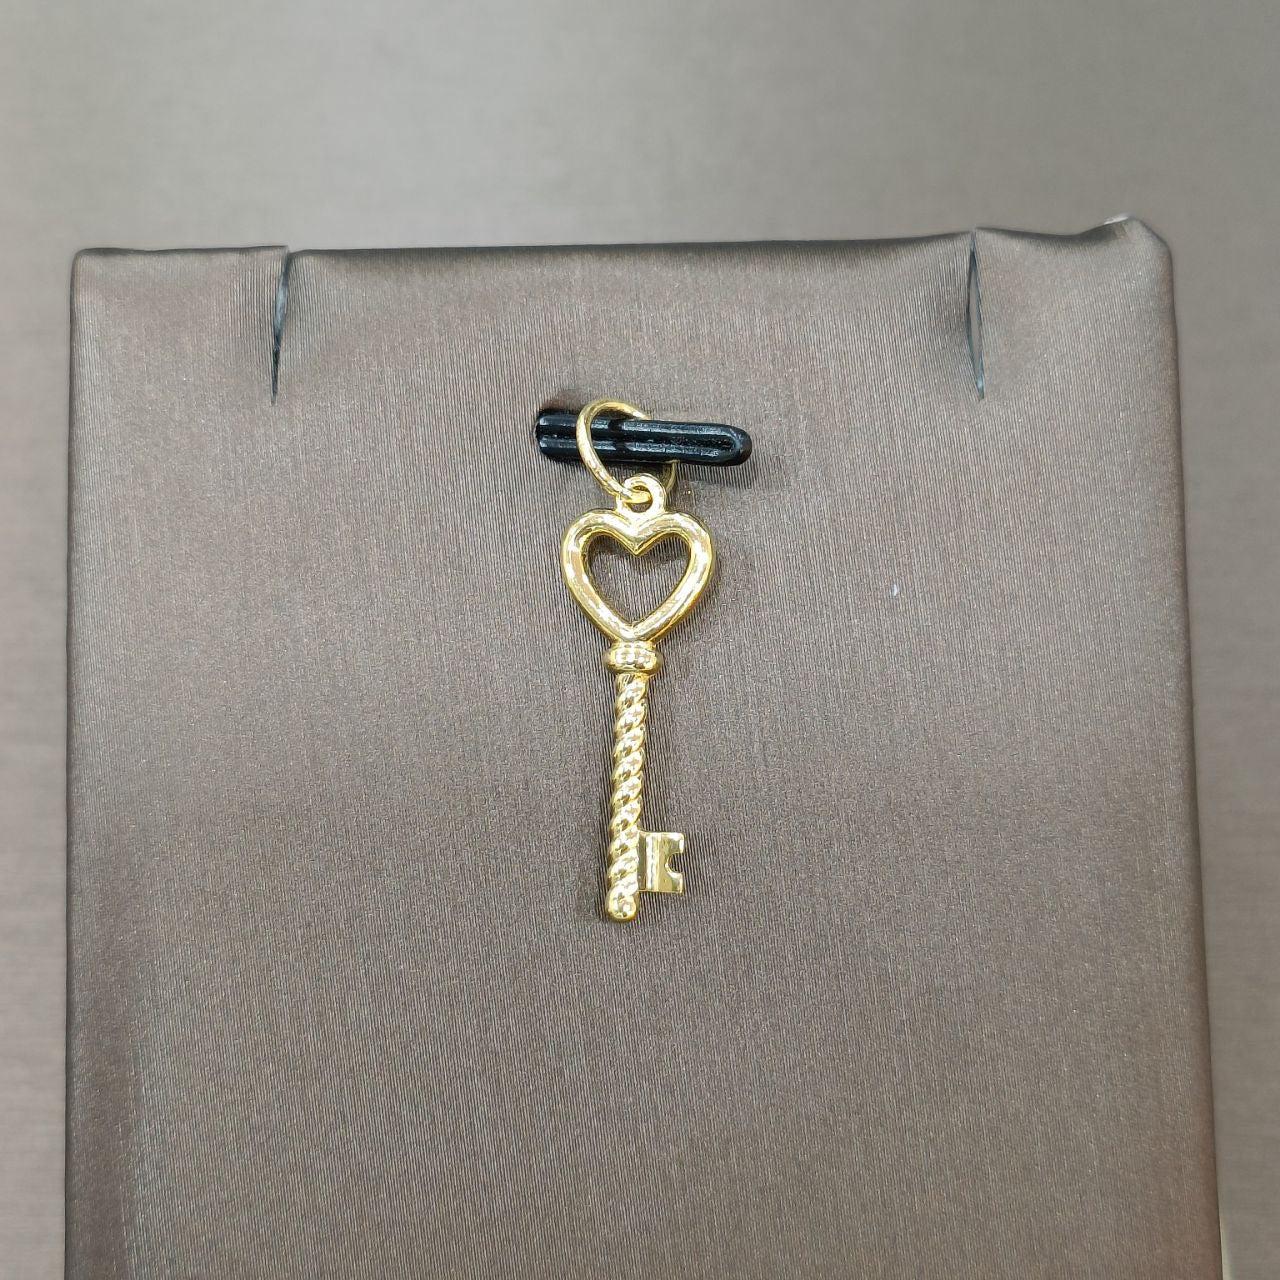 22k / 916 Gold Key Pendant-916 gold-Best Gold Shop